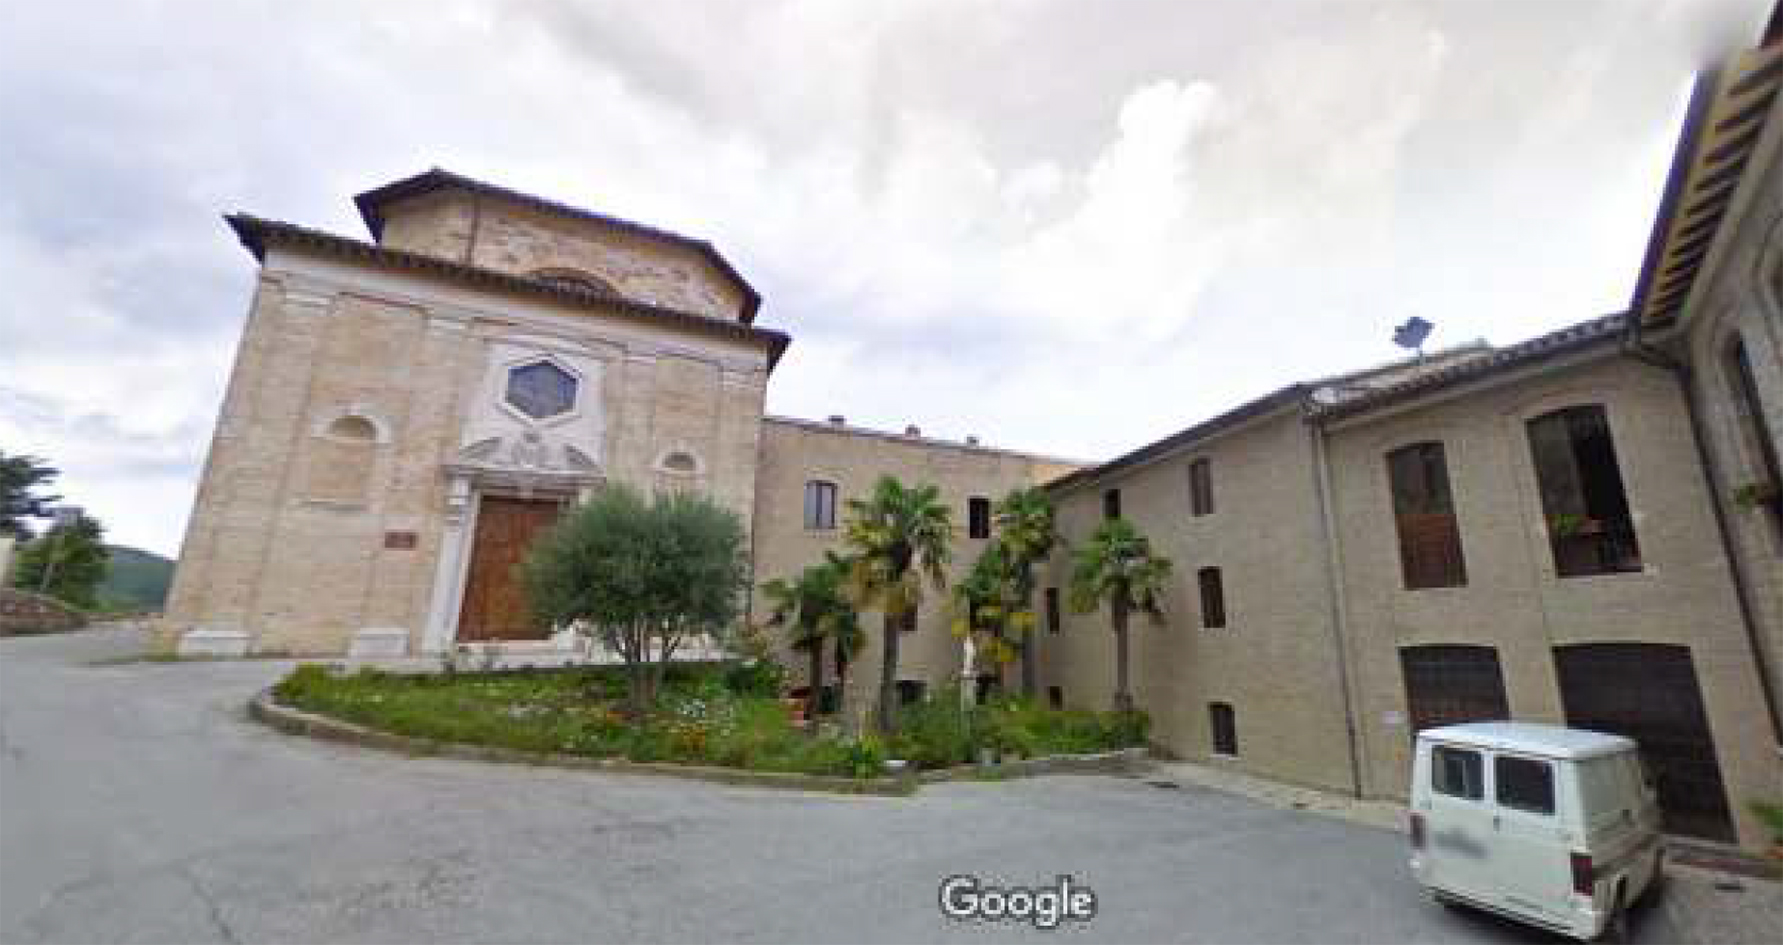 Monastero di S. Teresa (monastero, teresiano) - San Severino Marche (MC) 